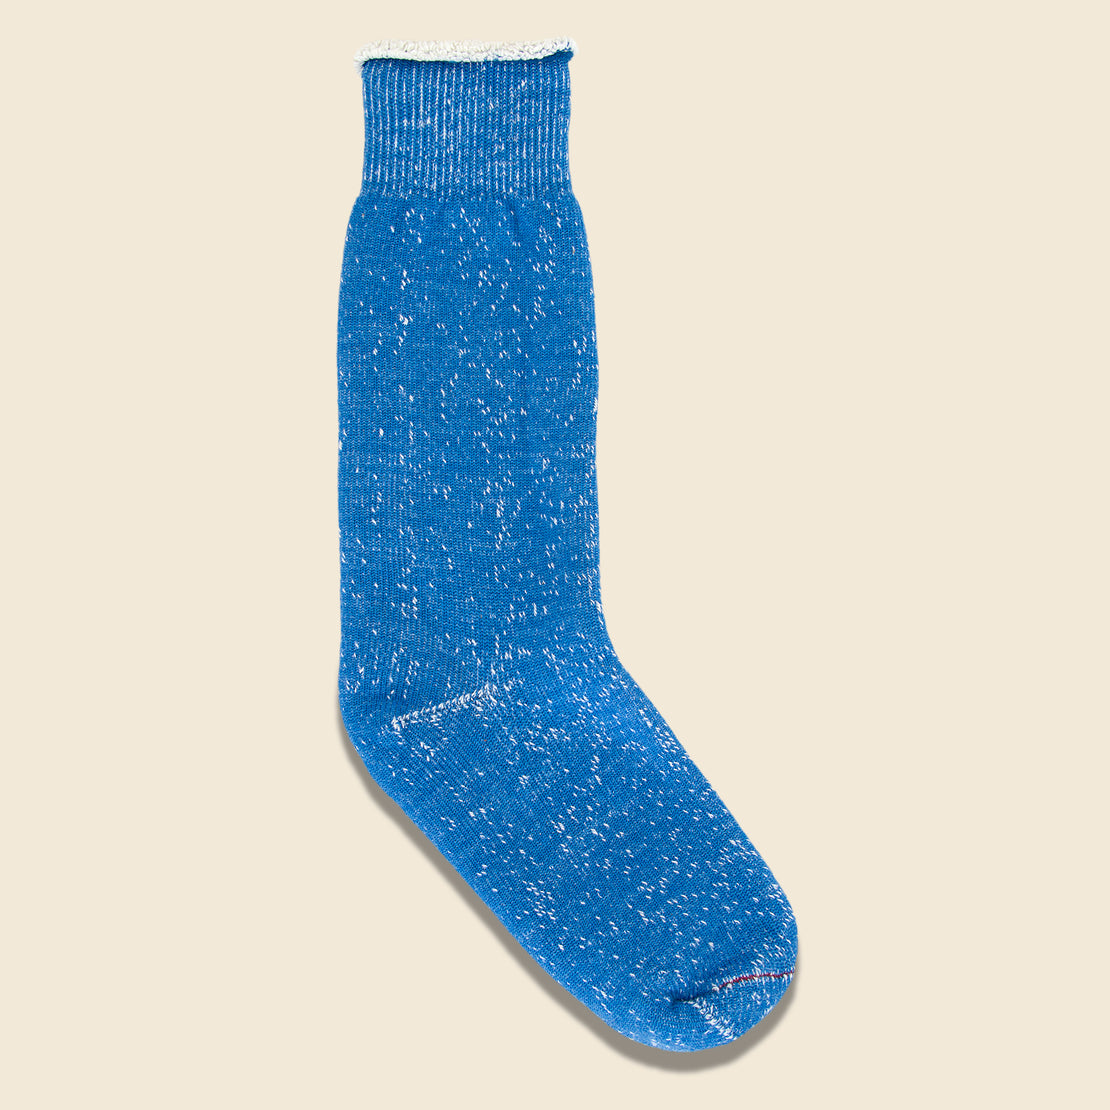 Below Zero Crew, American Made Merino Wool Socks